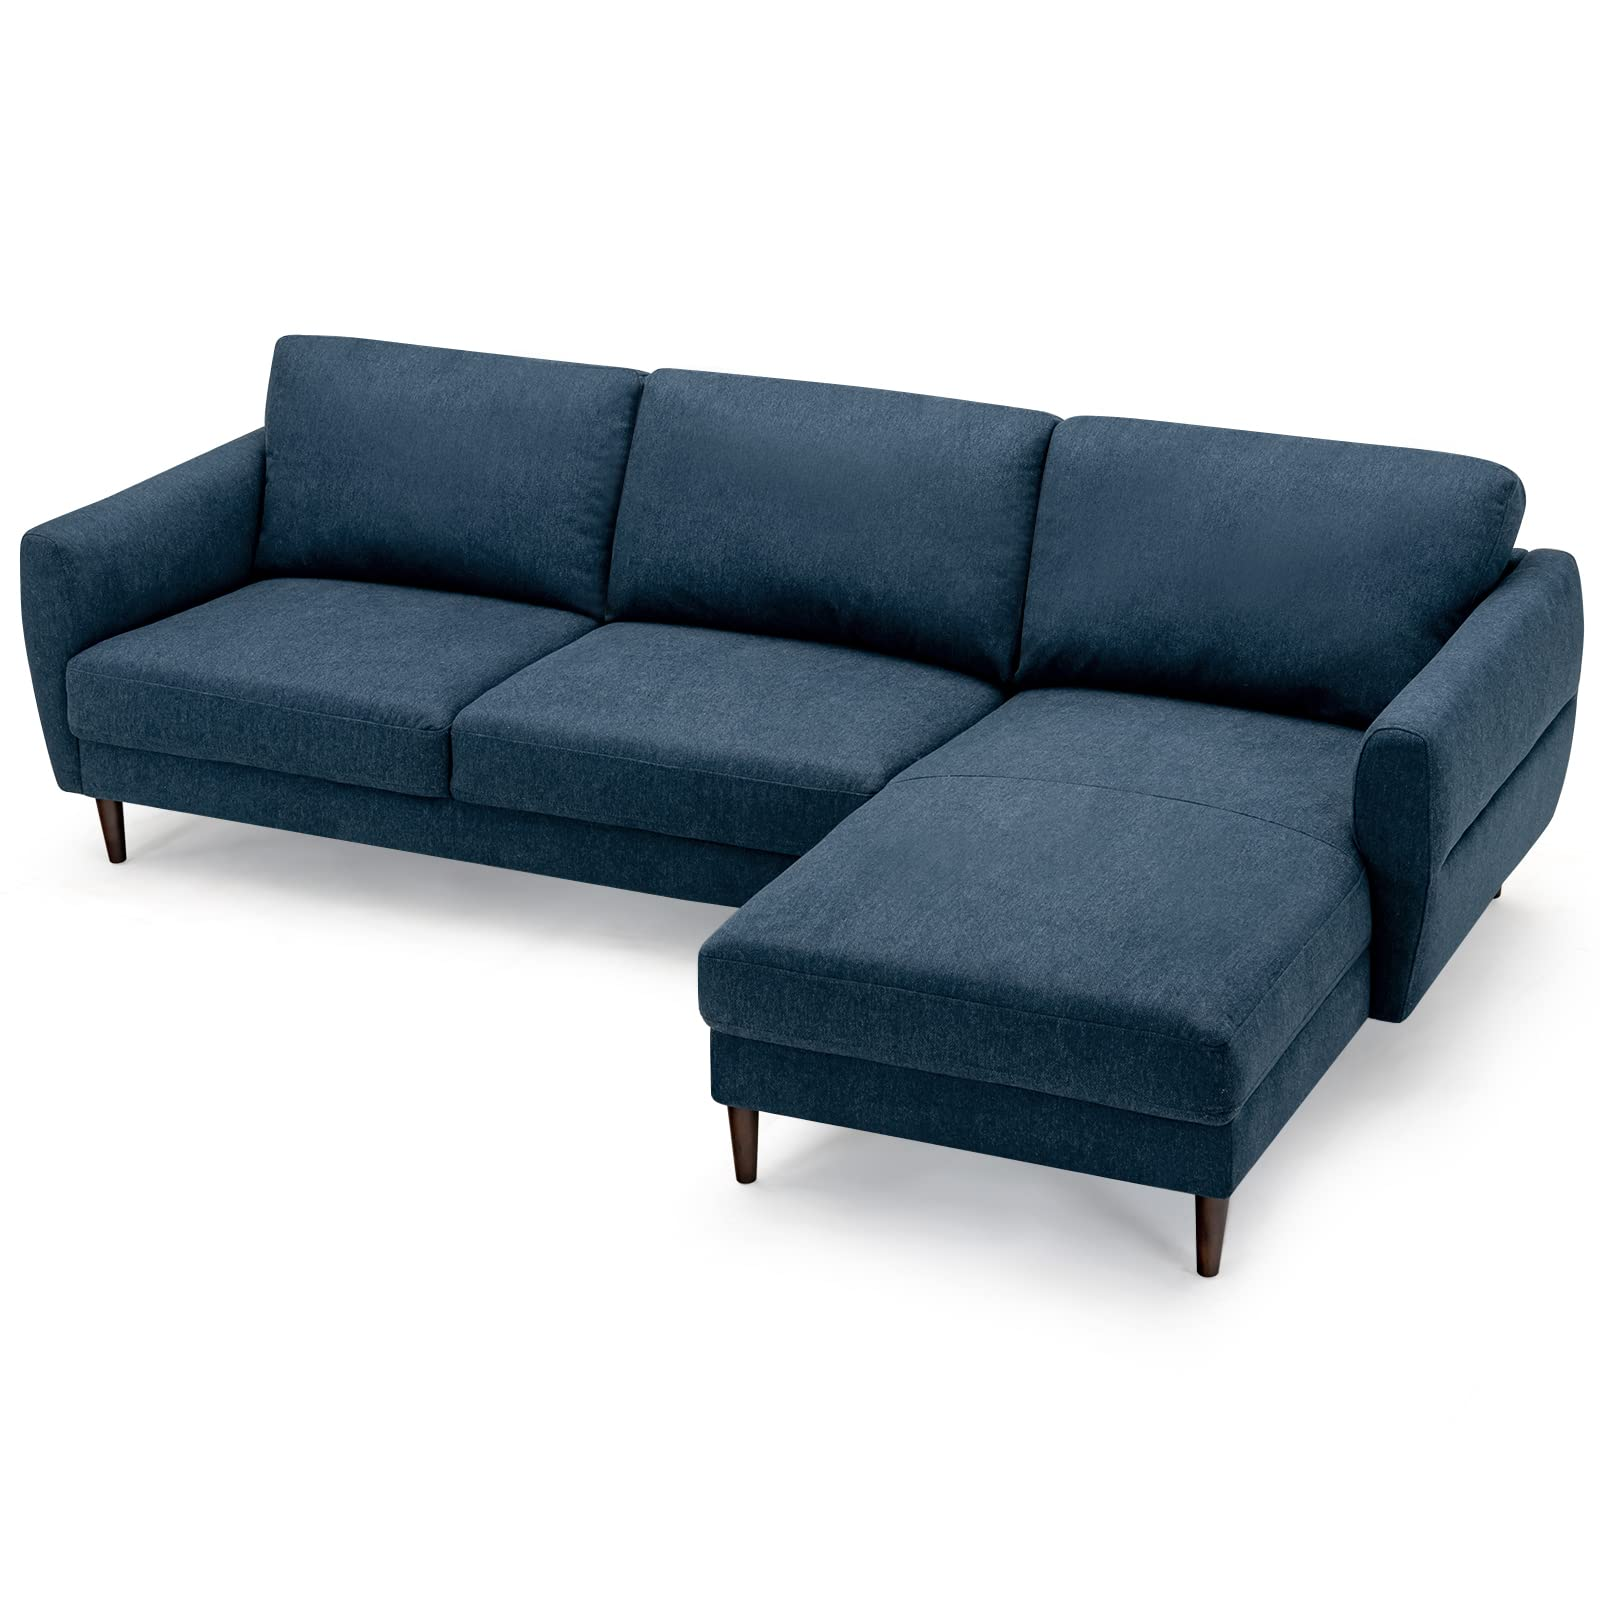 Giantex Sectional Sofa Couch Set, 3-Seat Sofa